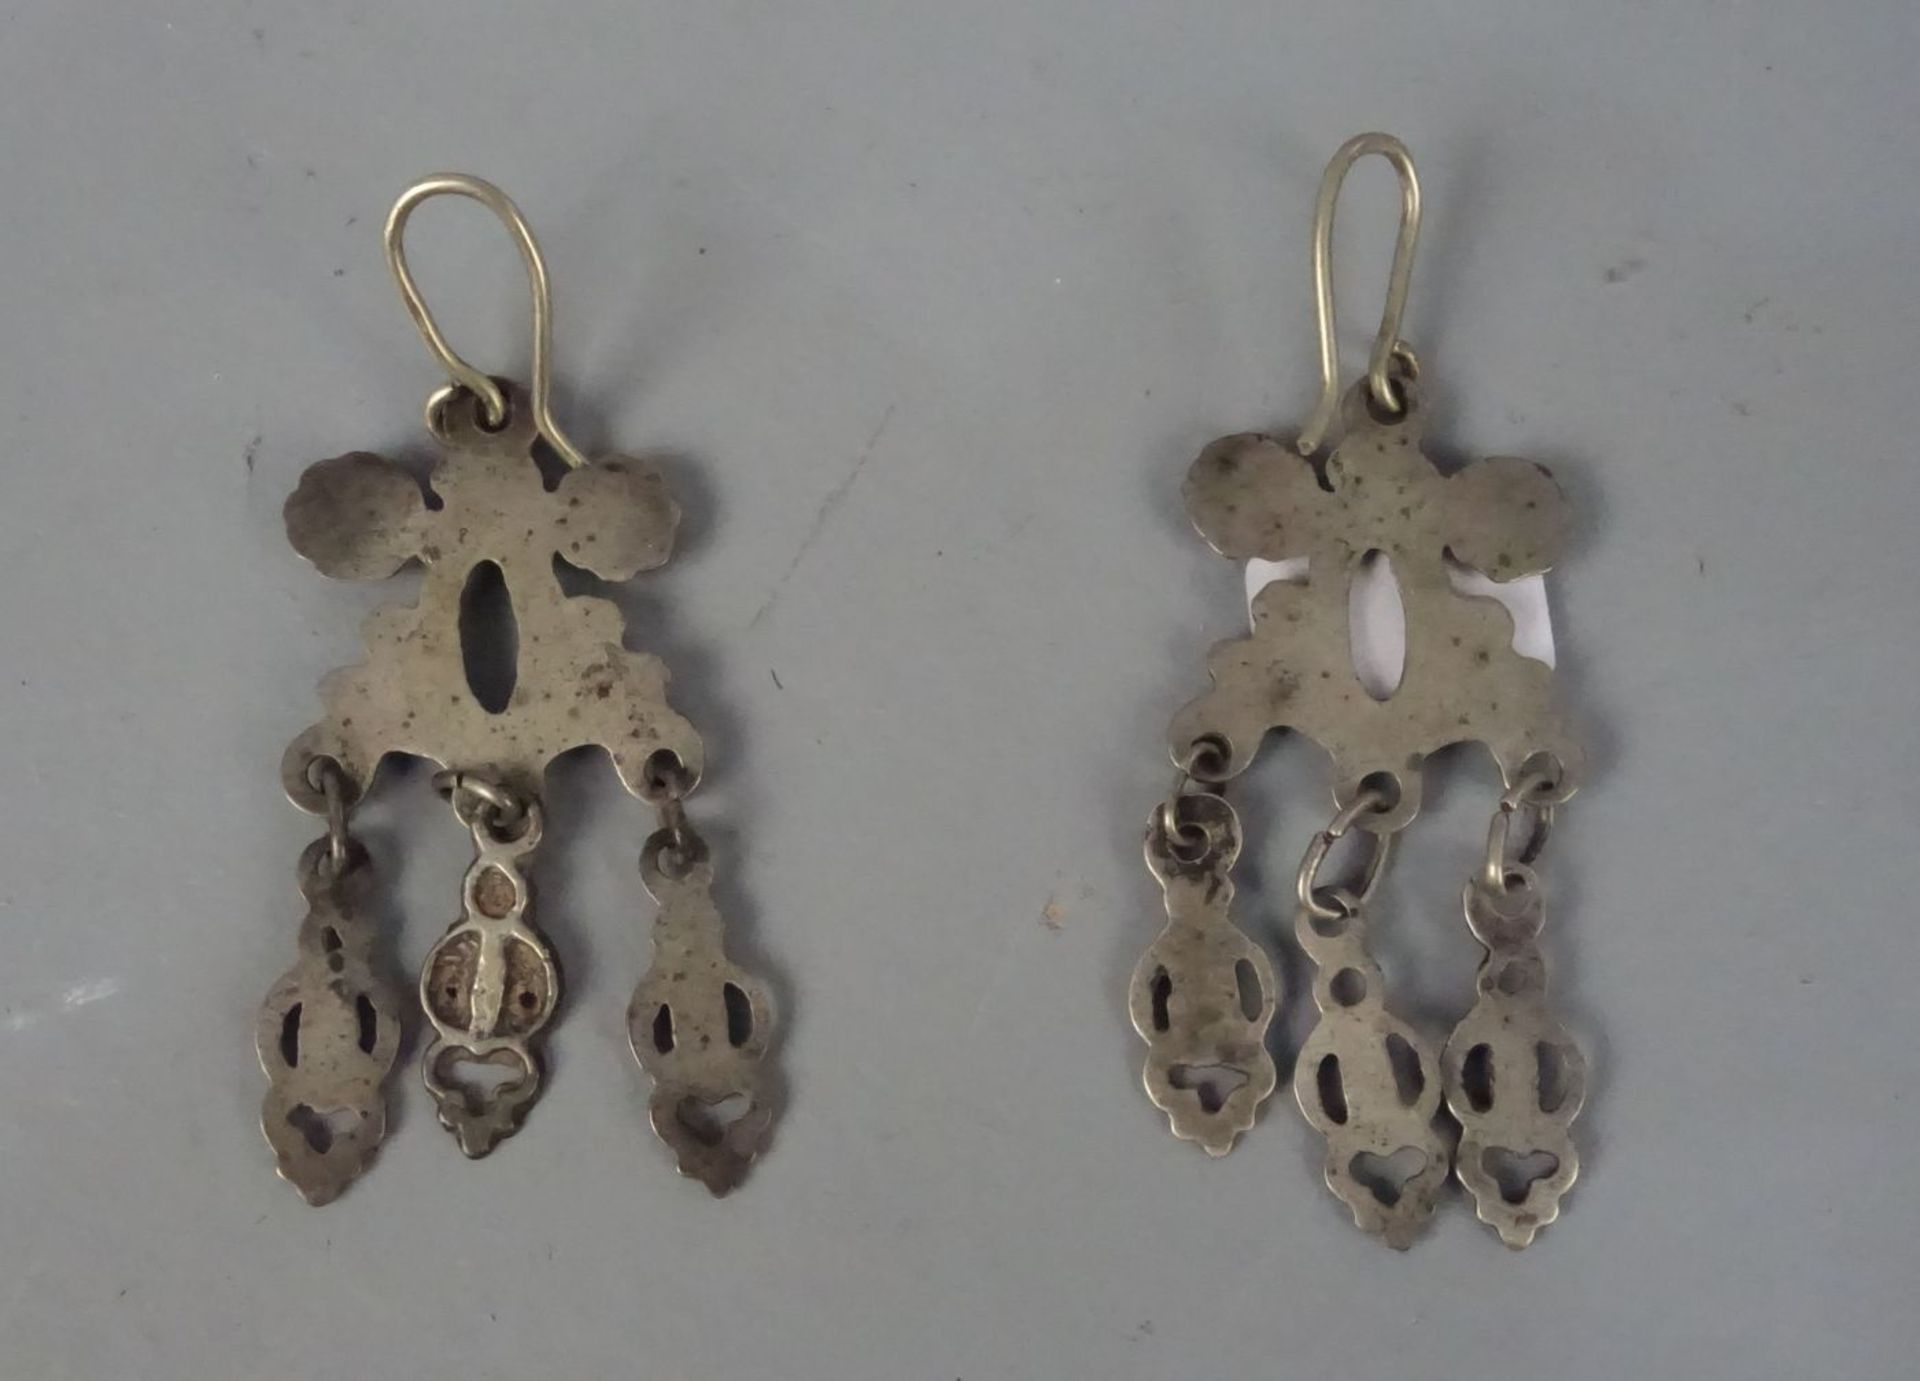 BERBER-SCHMUCK: OHRBEHANG / oriental earrings, Midelt / Marokko, wohl Silber (14 g). Ohrringe in - Bild 2 aus 2